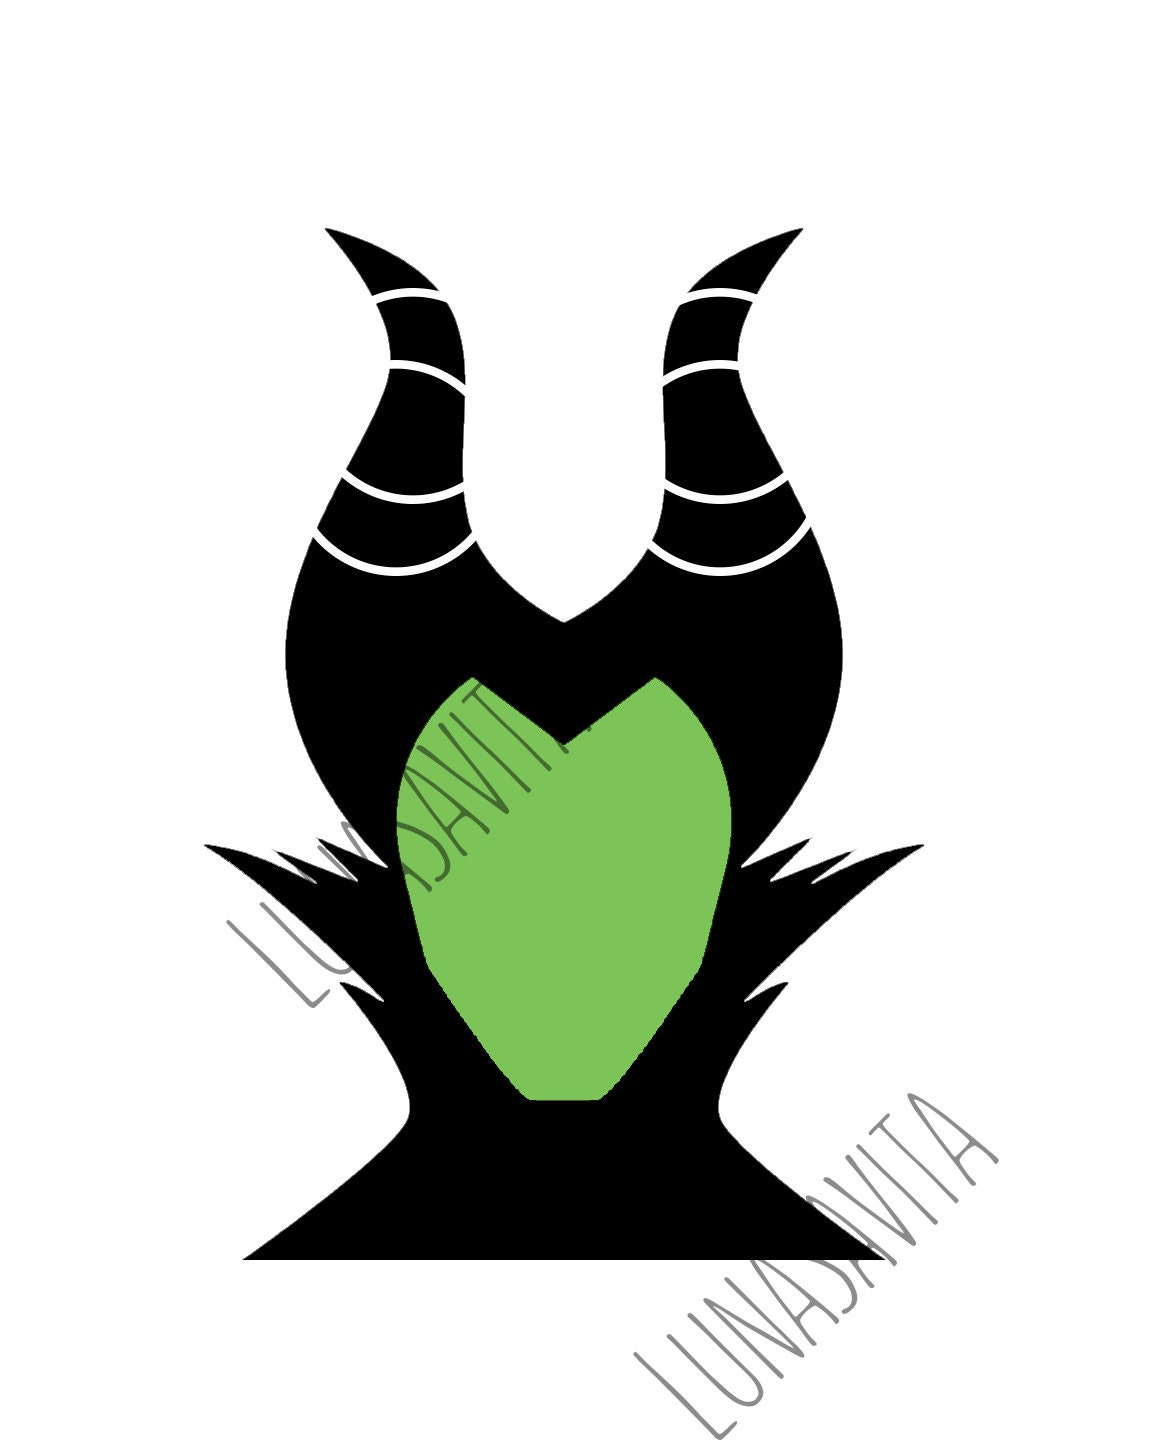 Download Maleficent Disney Inspired Design SVG DXF for Cricut Design